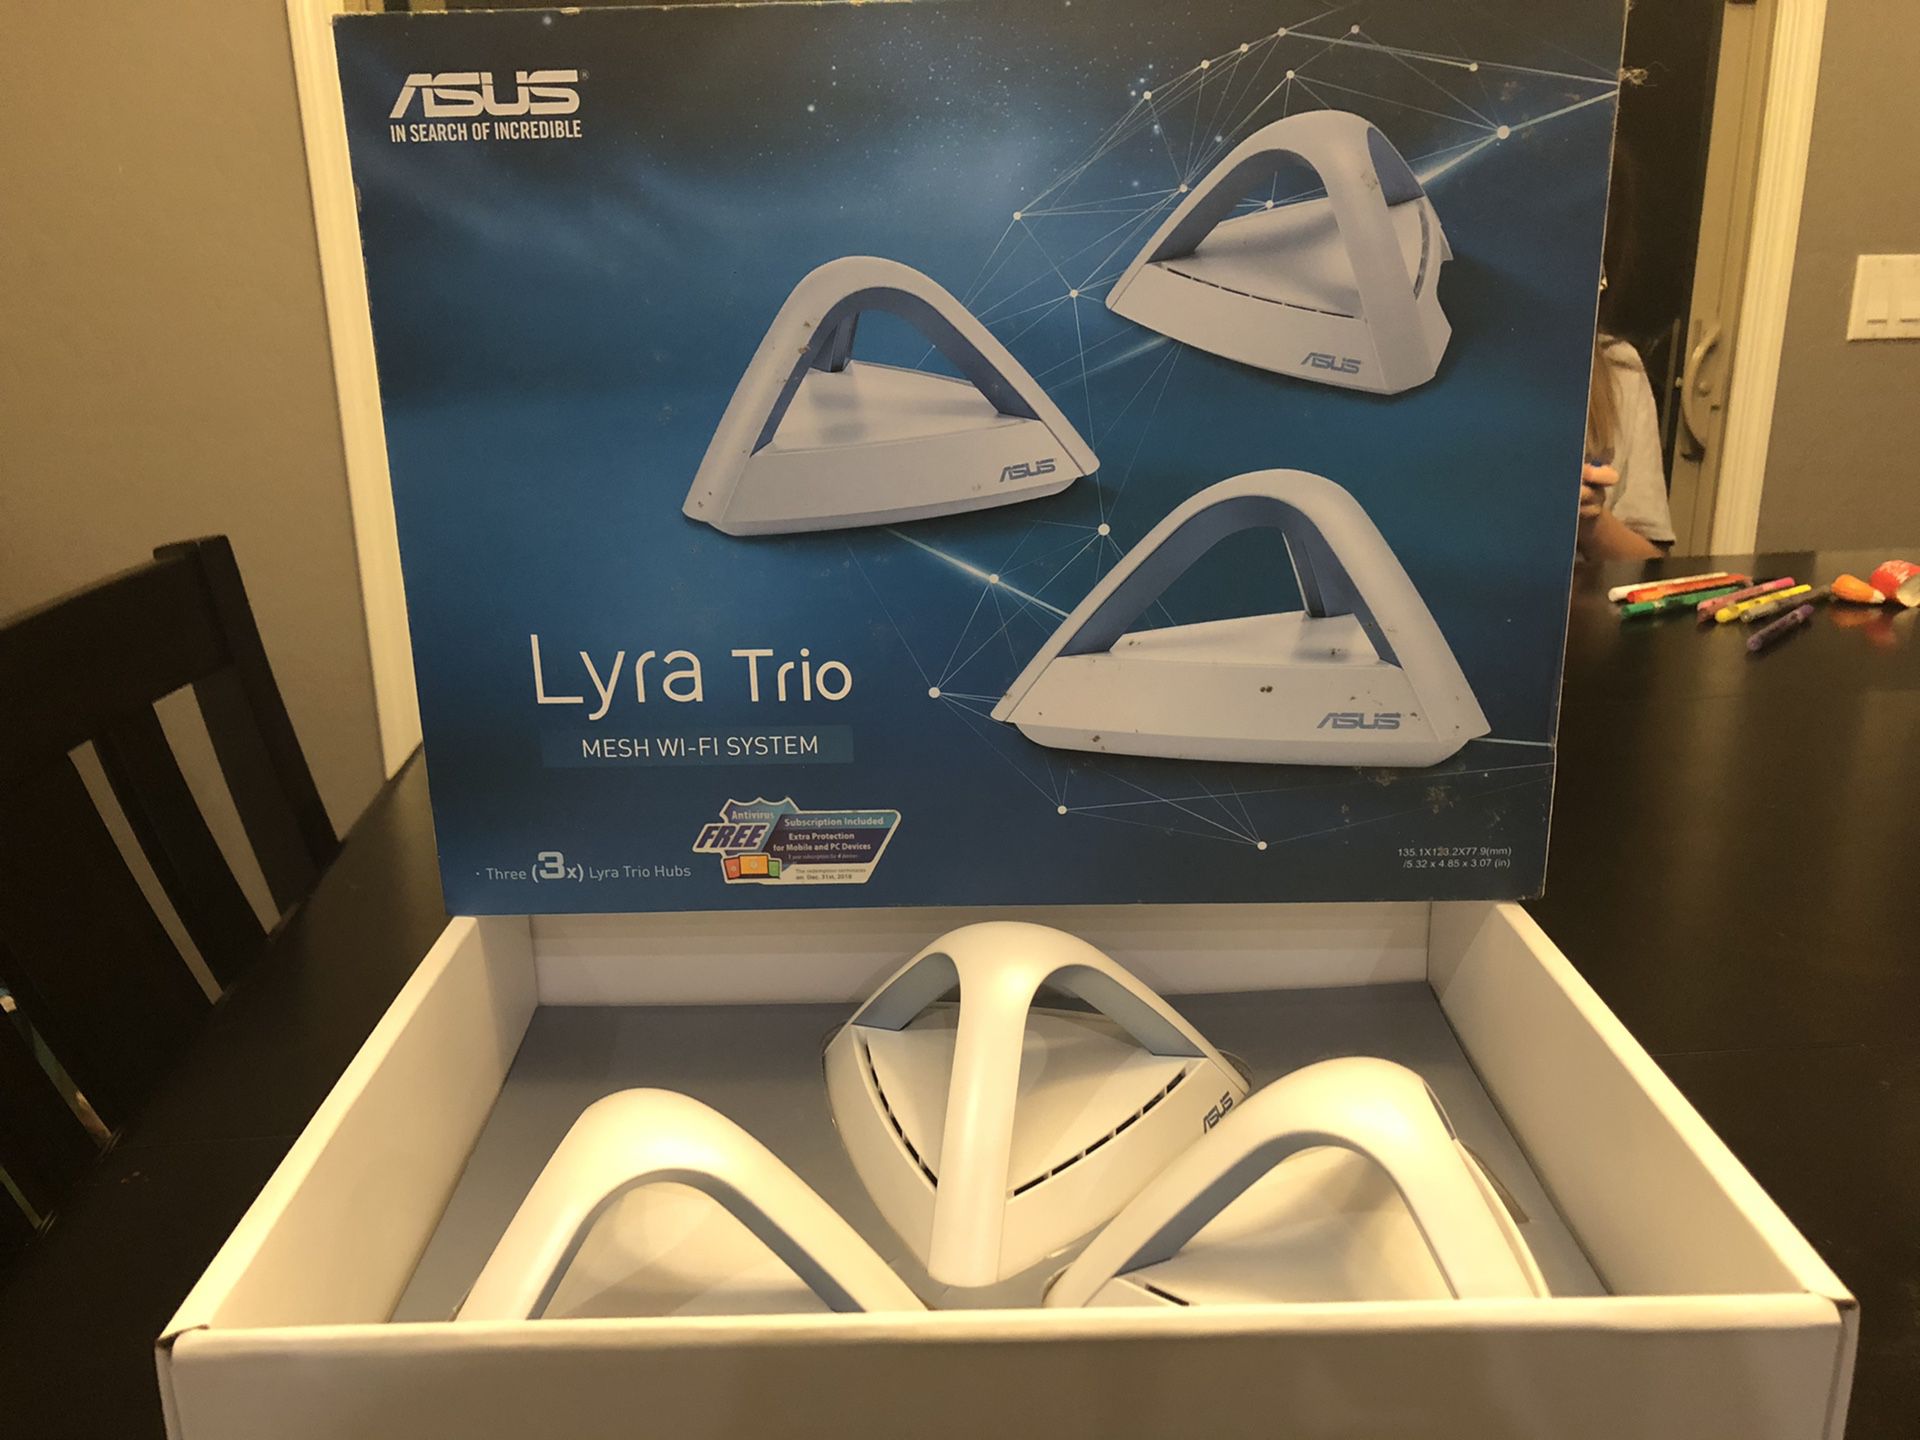 Asus Lyra Trio mesh router Wi-fi system